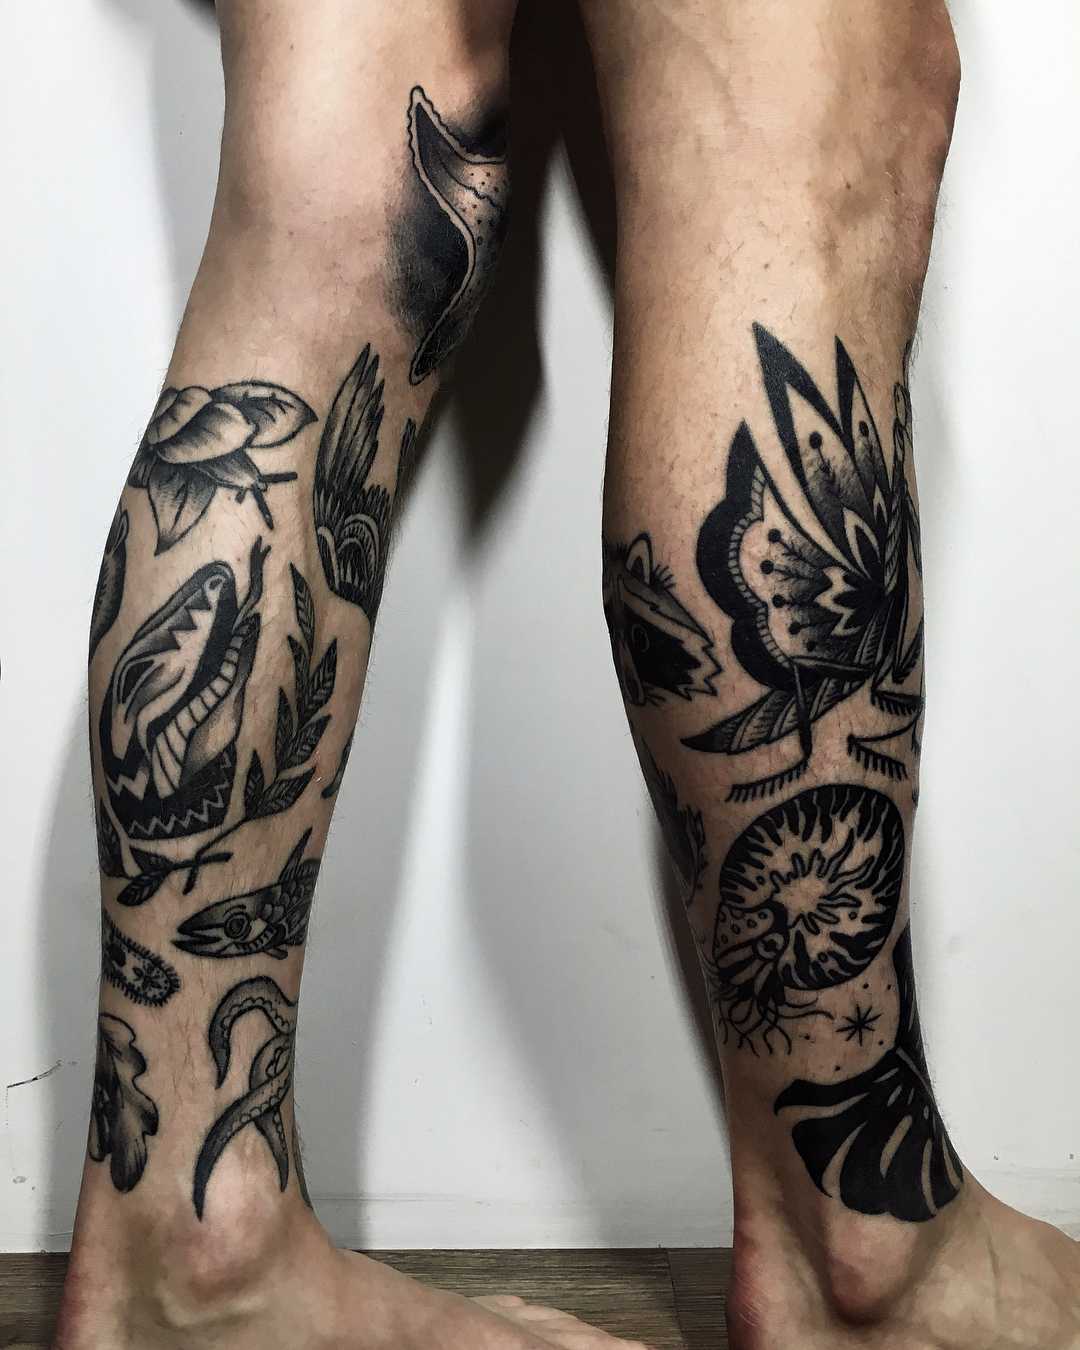 Various black tattoos on calves